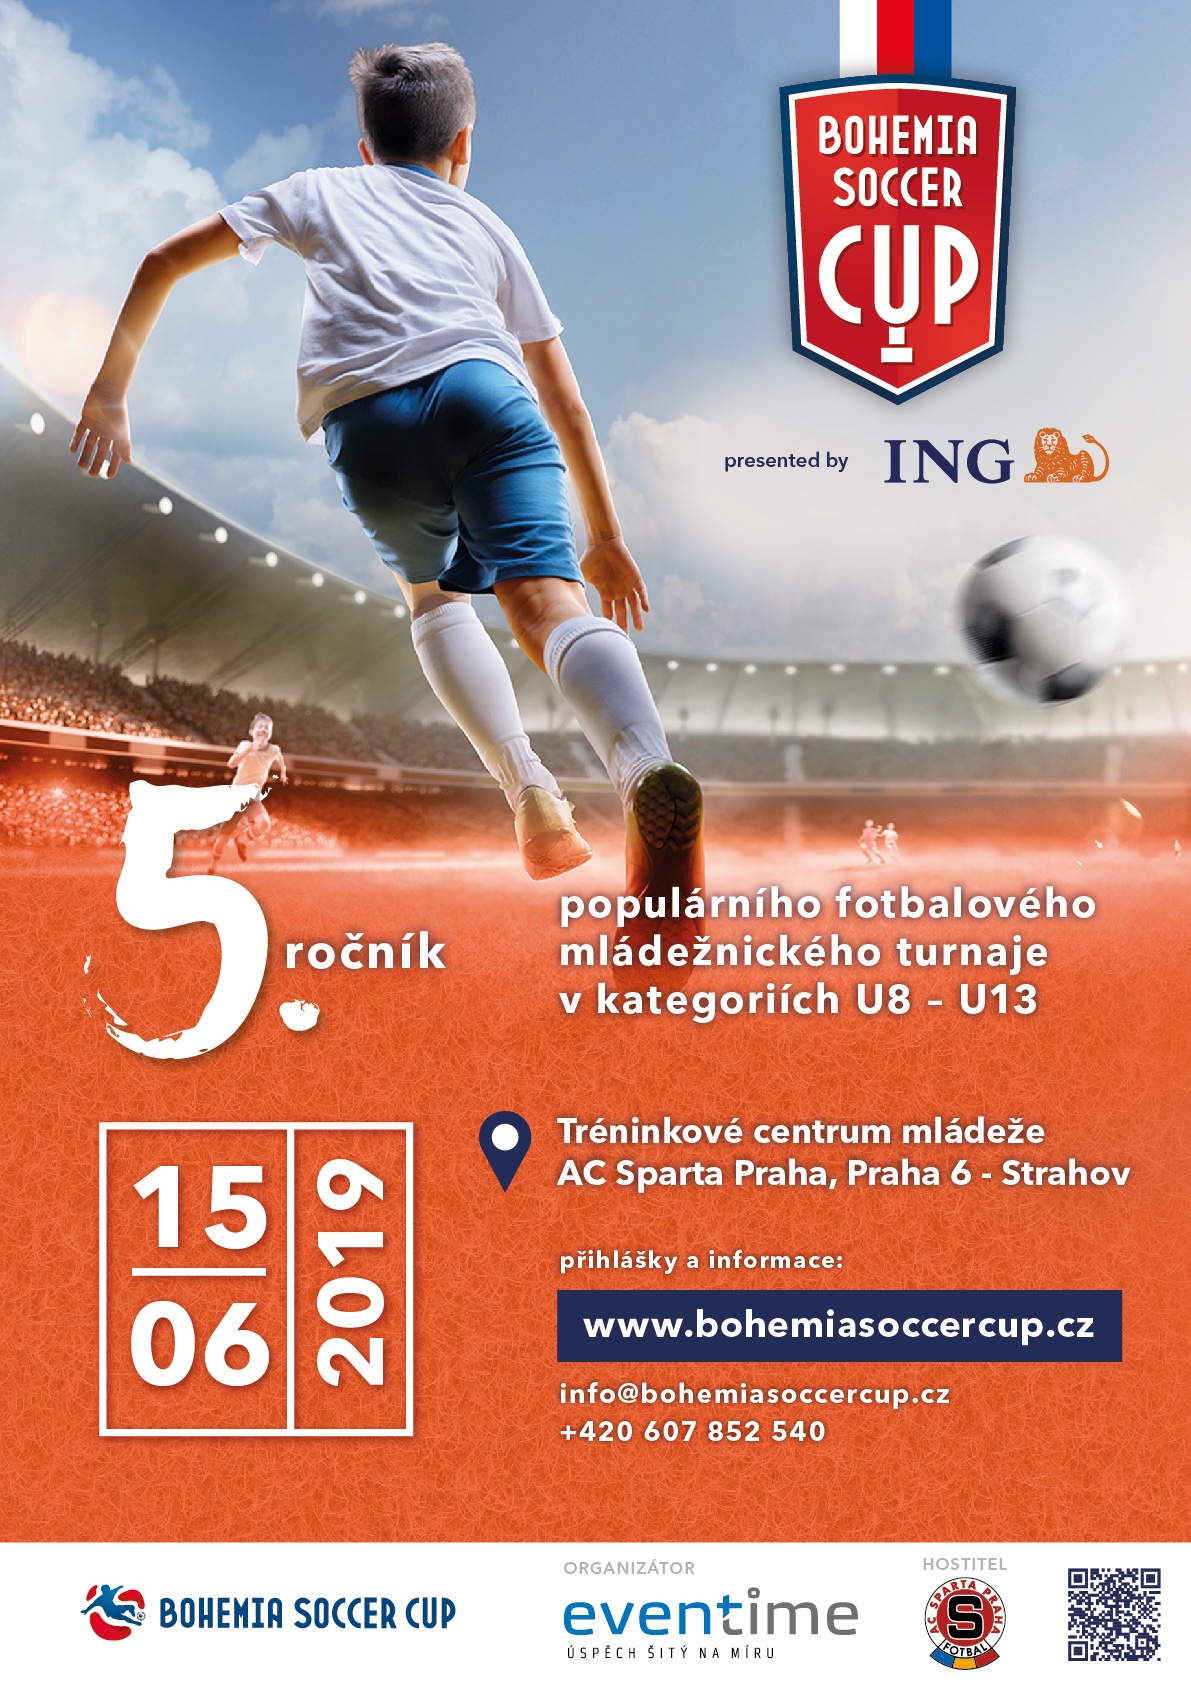 ING Bohemia Soccer Cup 2019